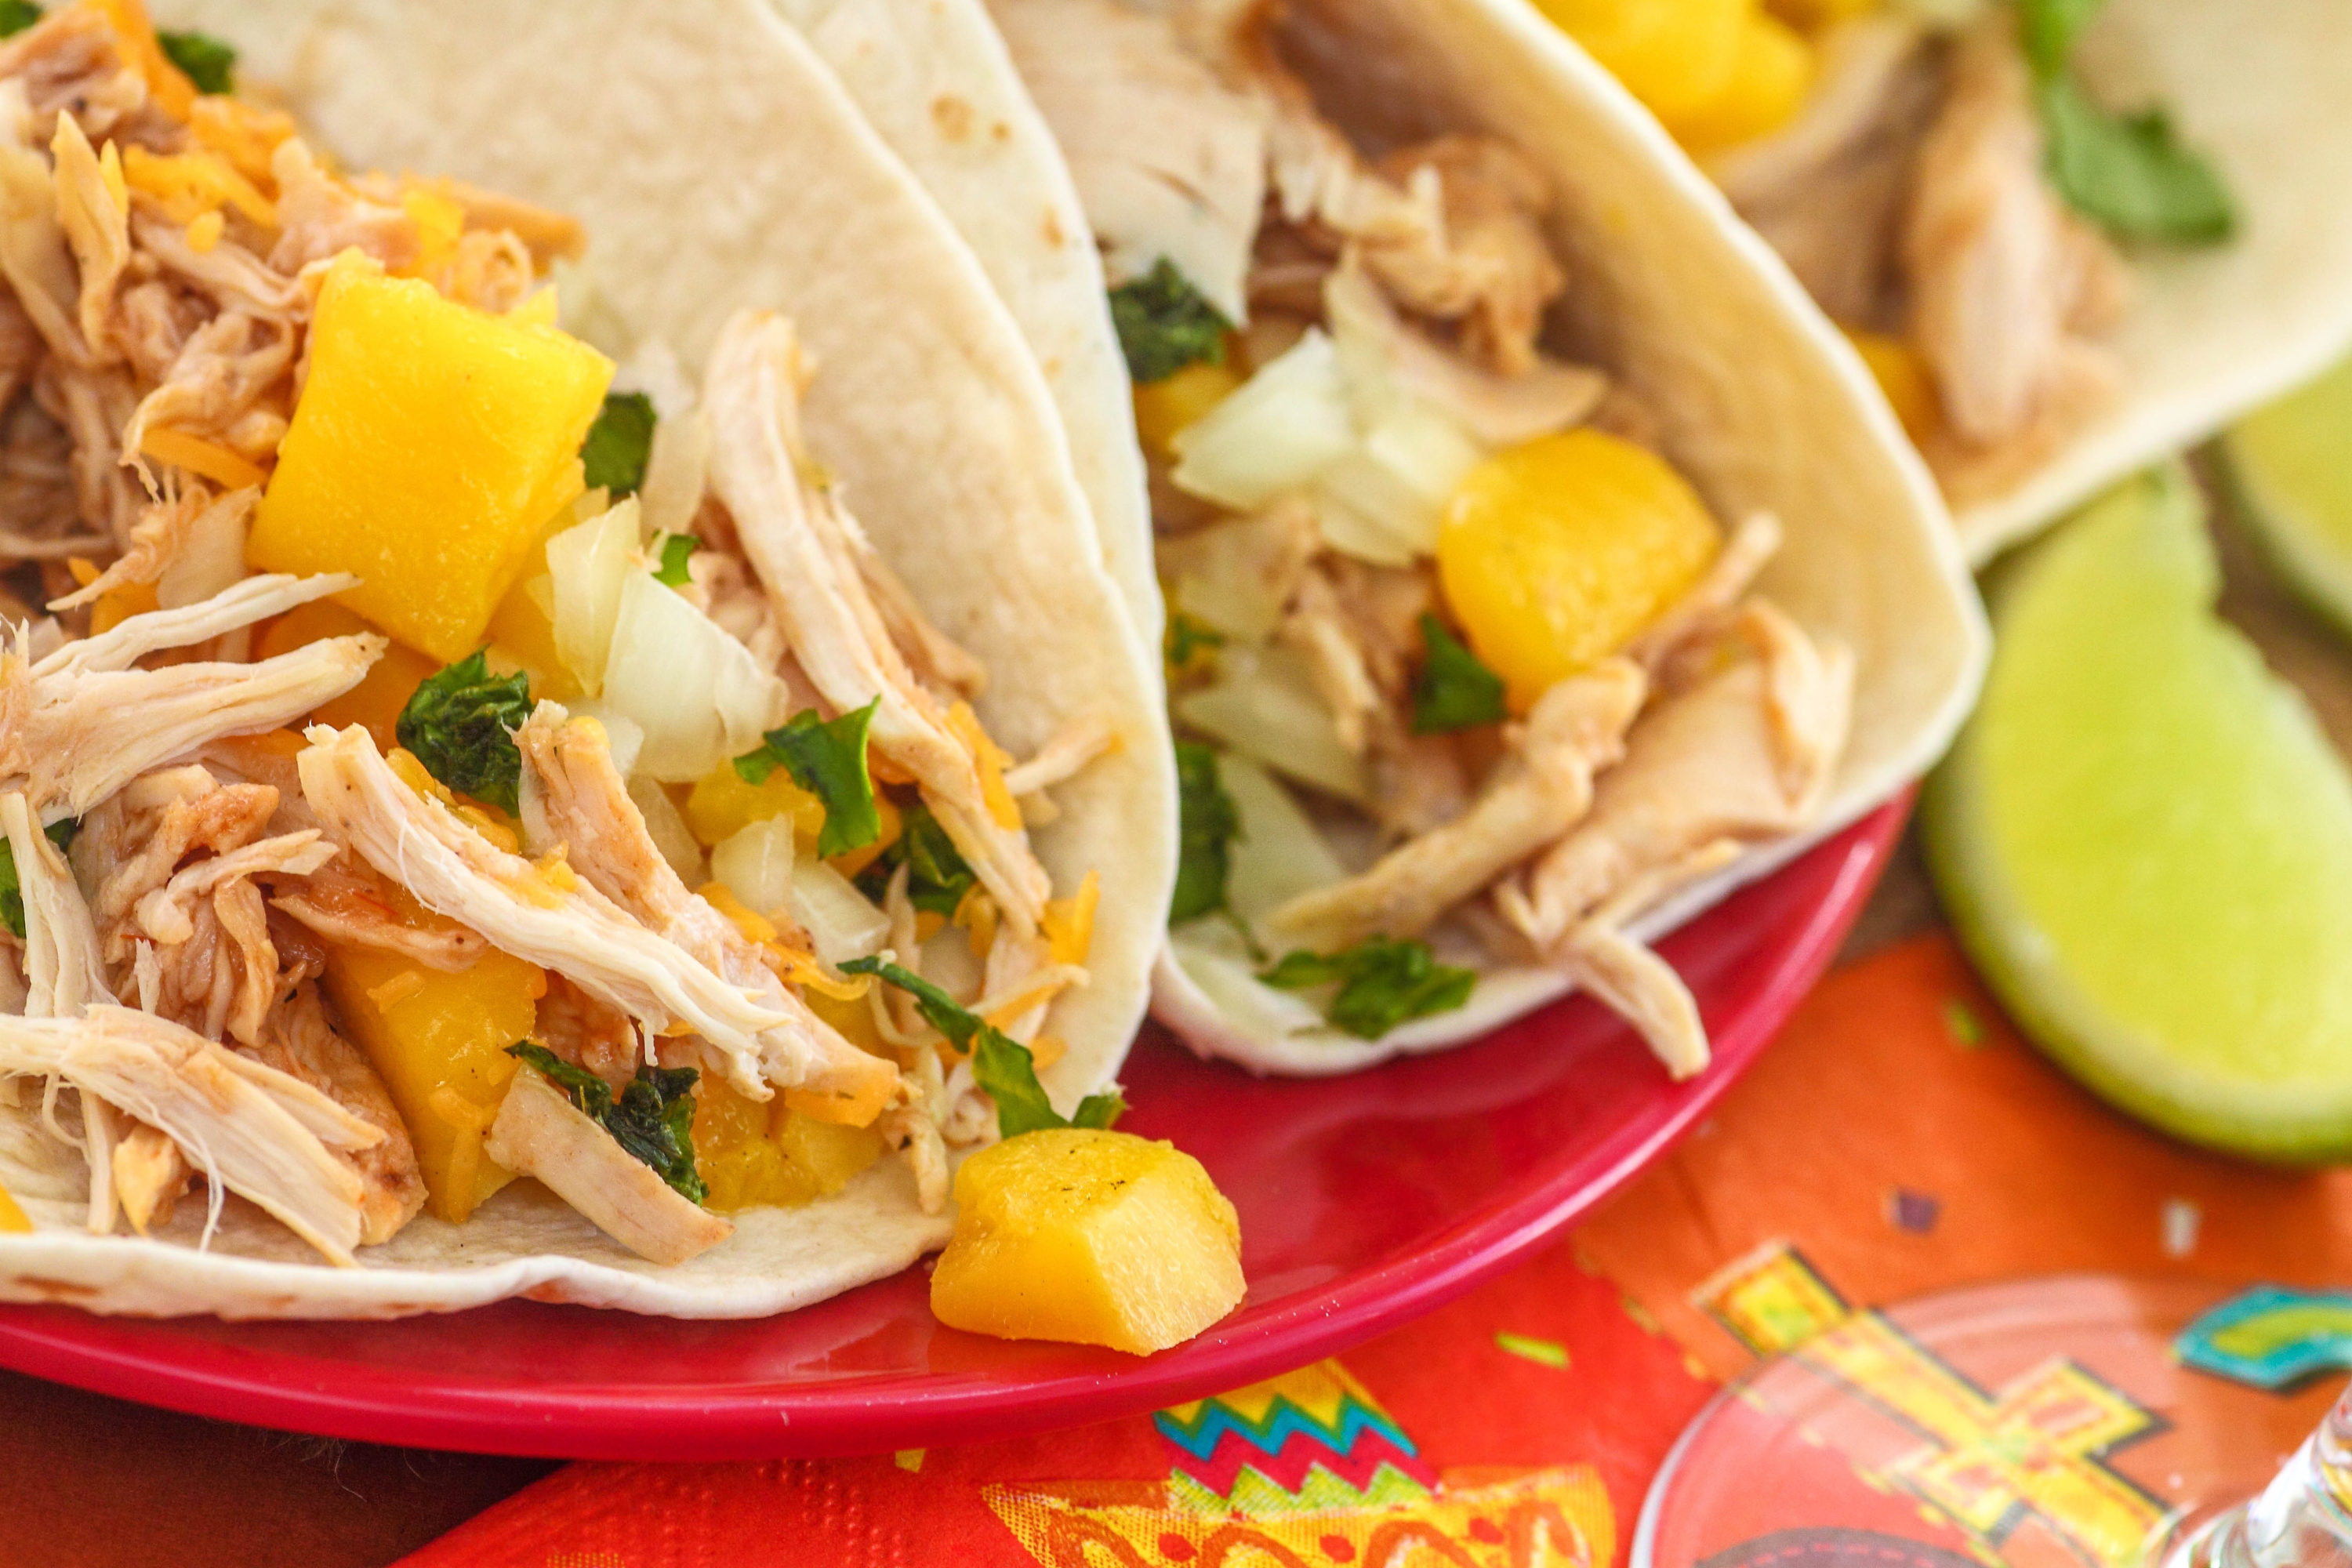 Cinco de Mayo meets Taco Tuesday - With a nod to both Taco Tuesday and Cinco de Mayo, here are some tasty taco tips. #CincoDeMayo #TacoTuesday